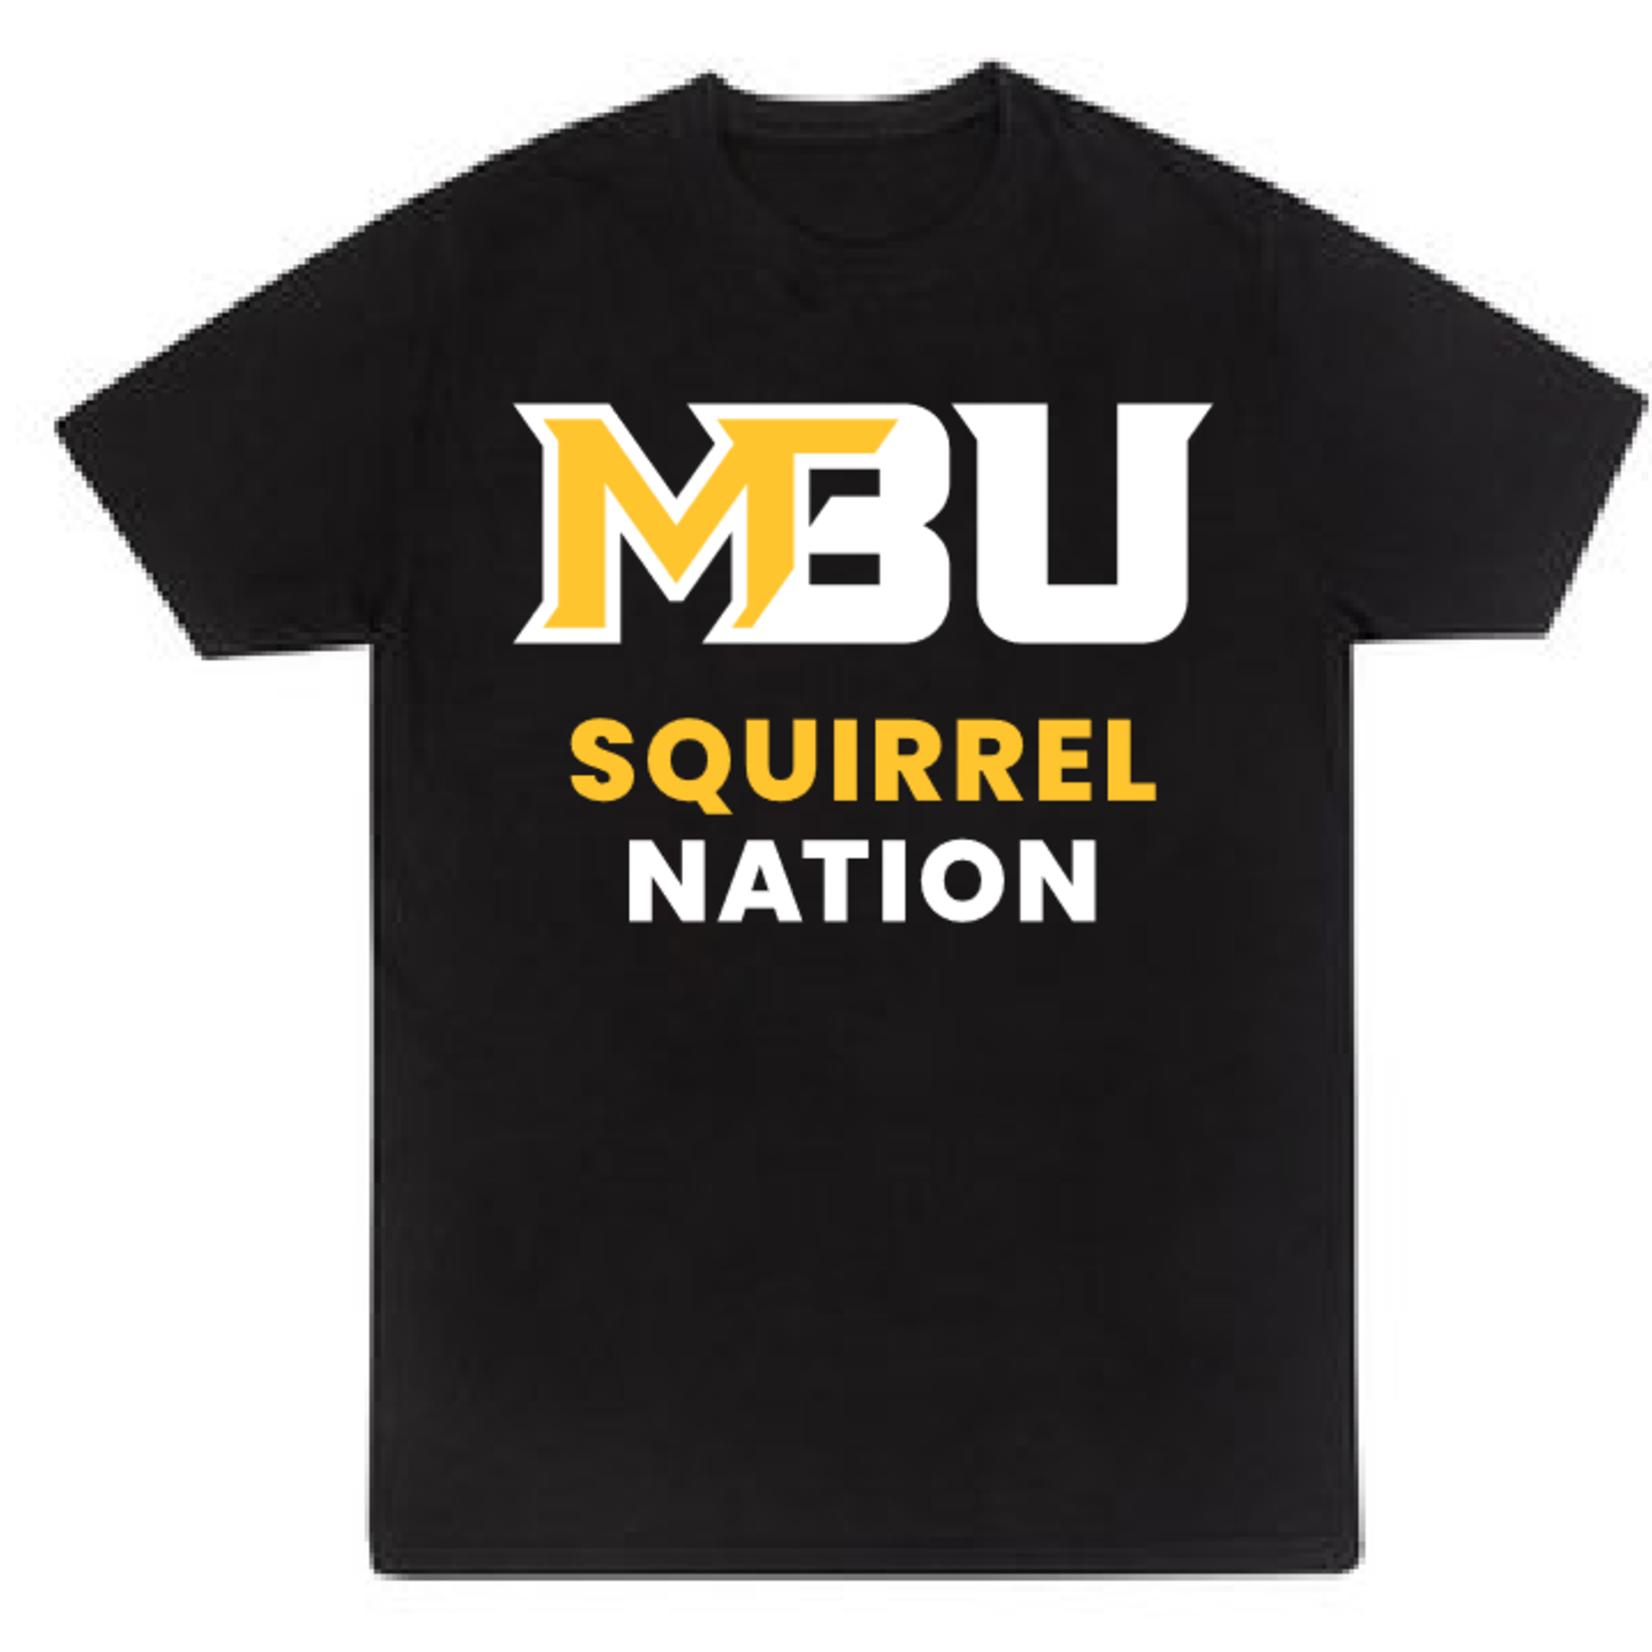 Squirrel Nation Shirts